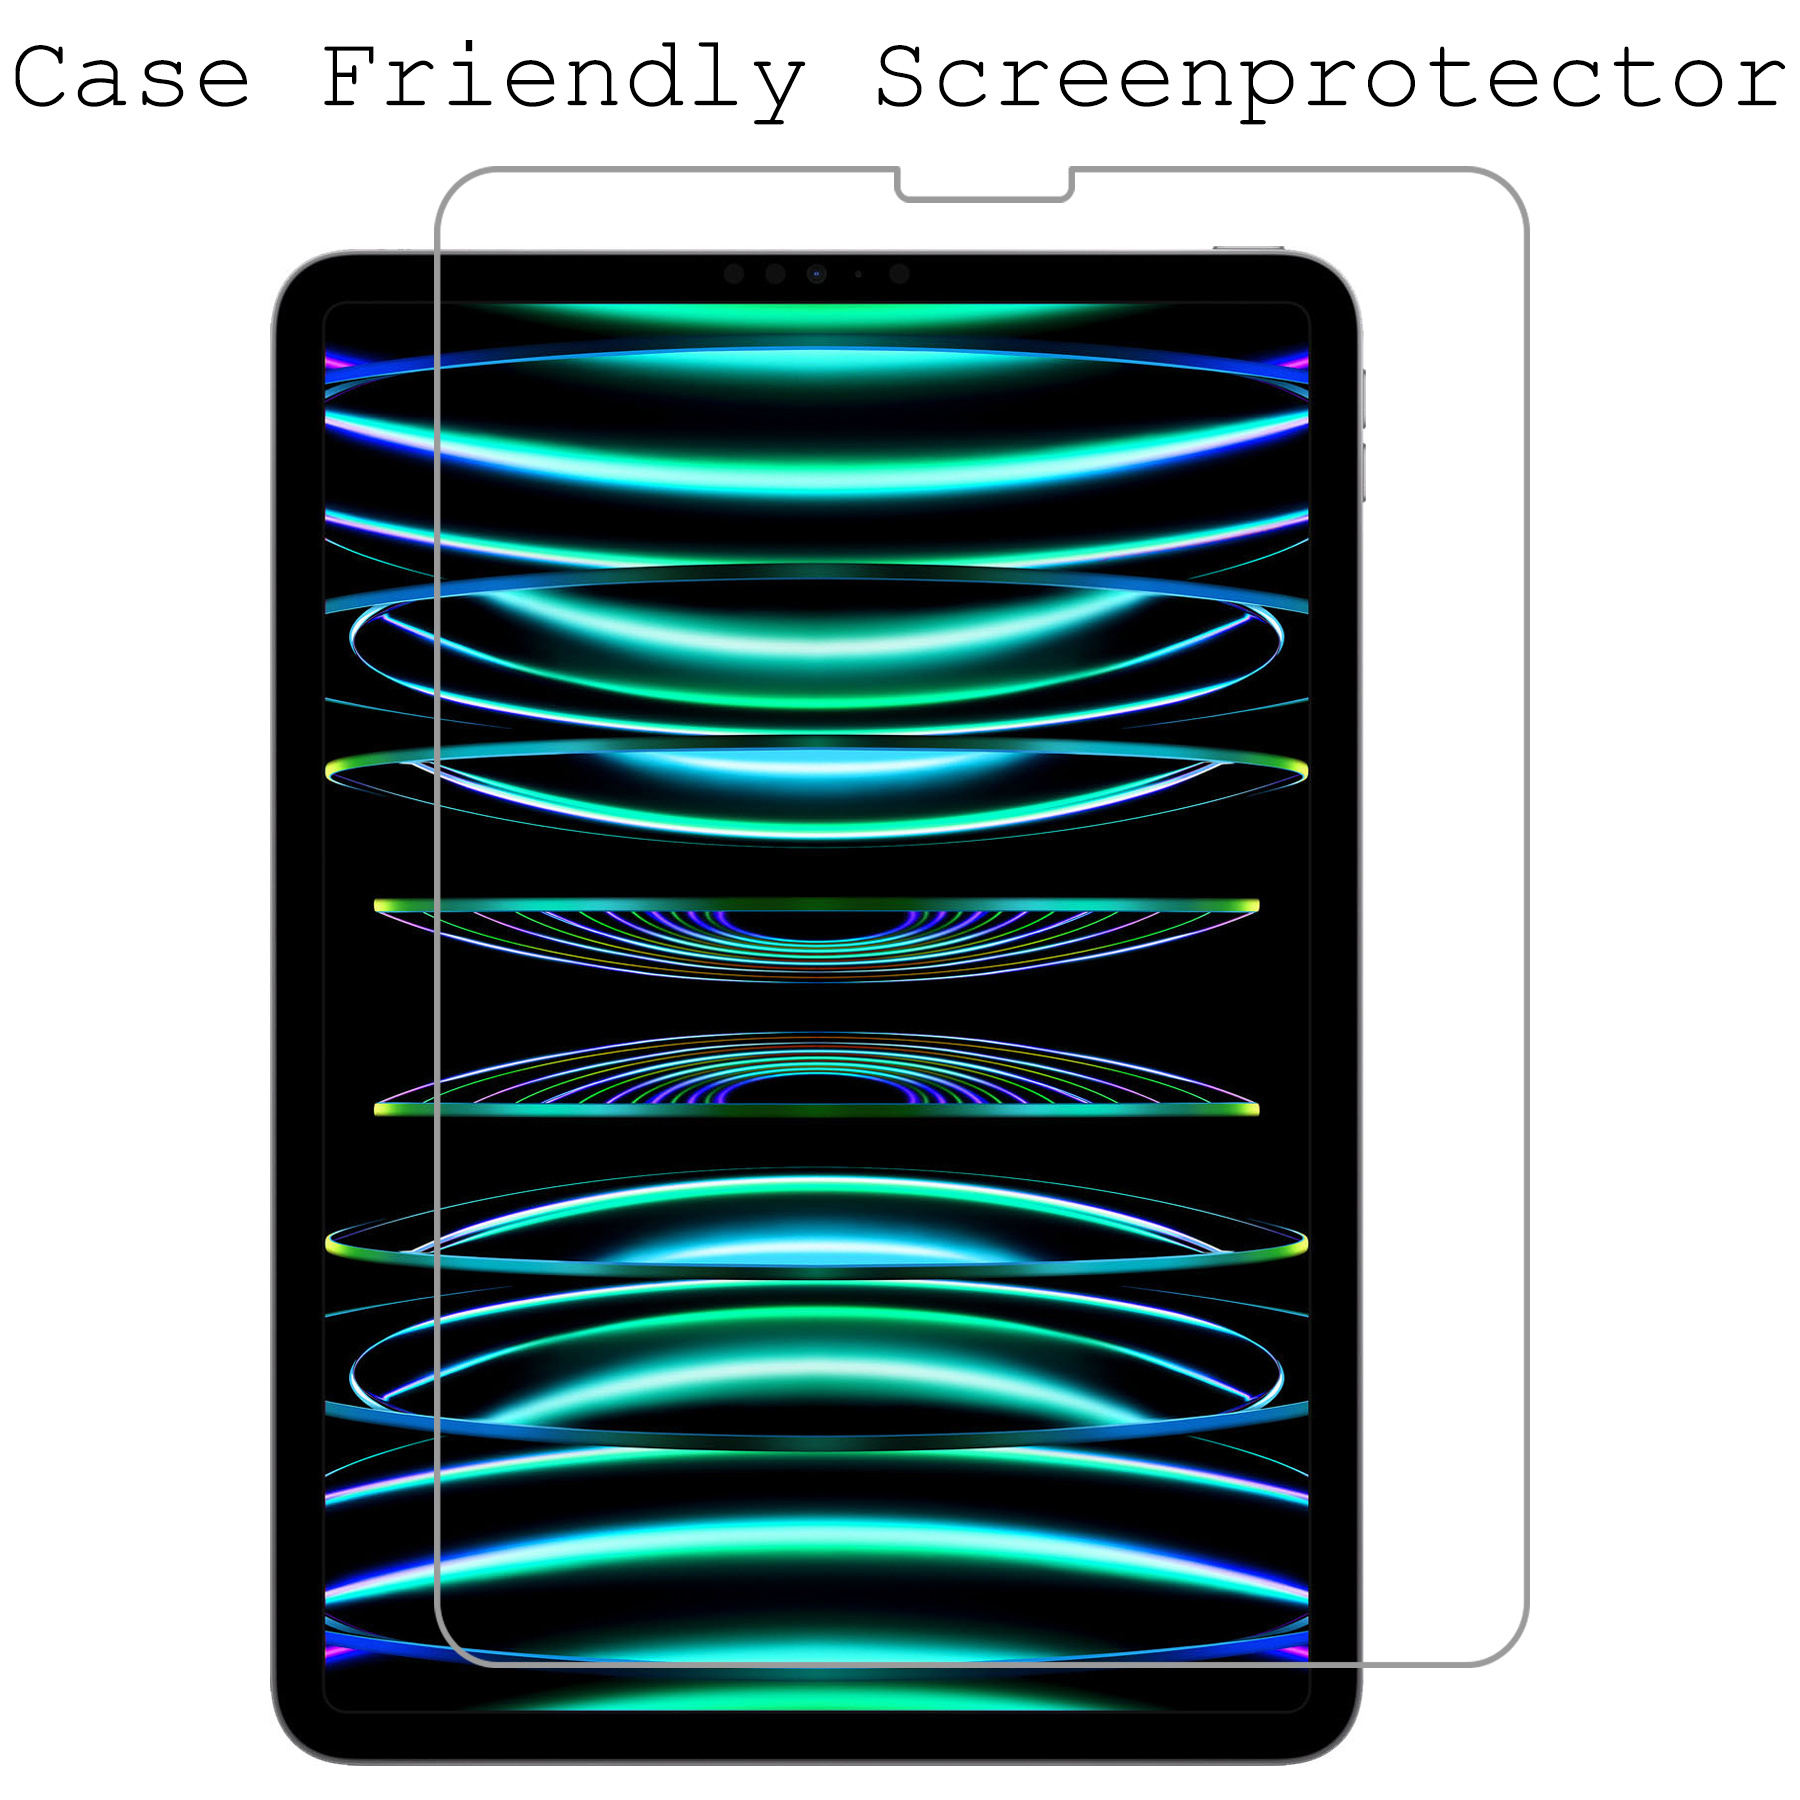 BASEY. BASEY. iPad Pro 11 inch (2021) Screenprotector - 3 PACK